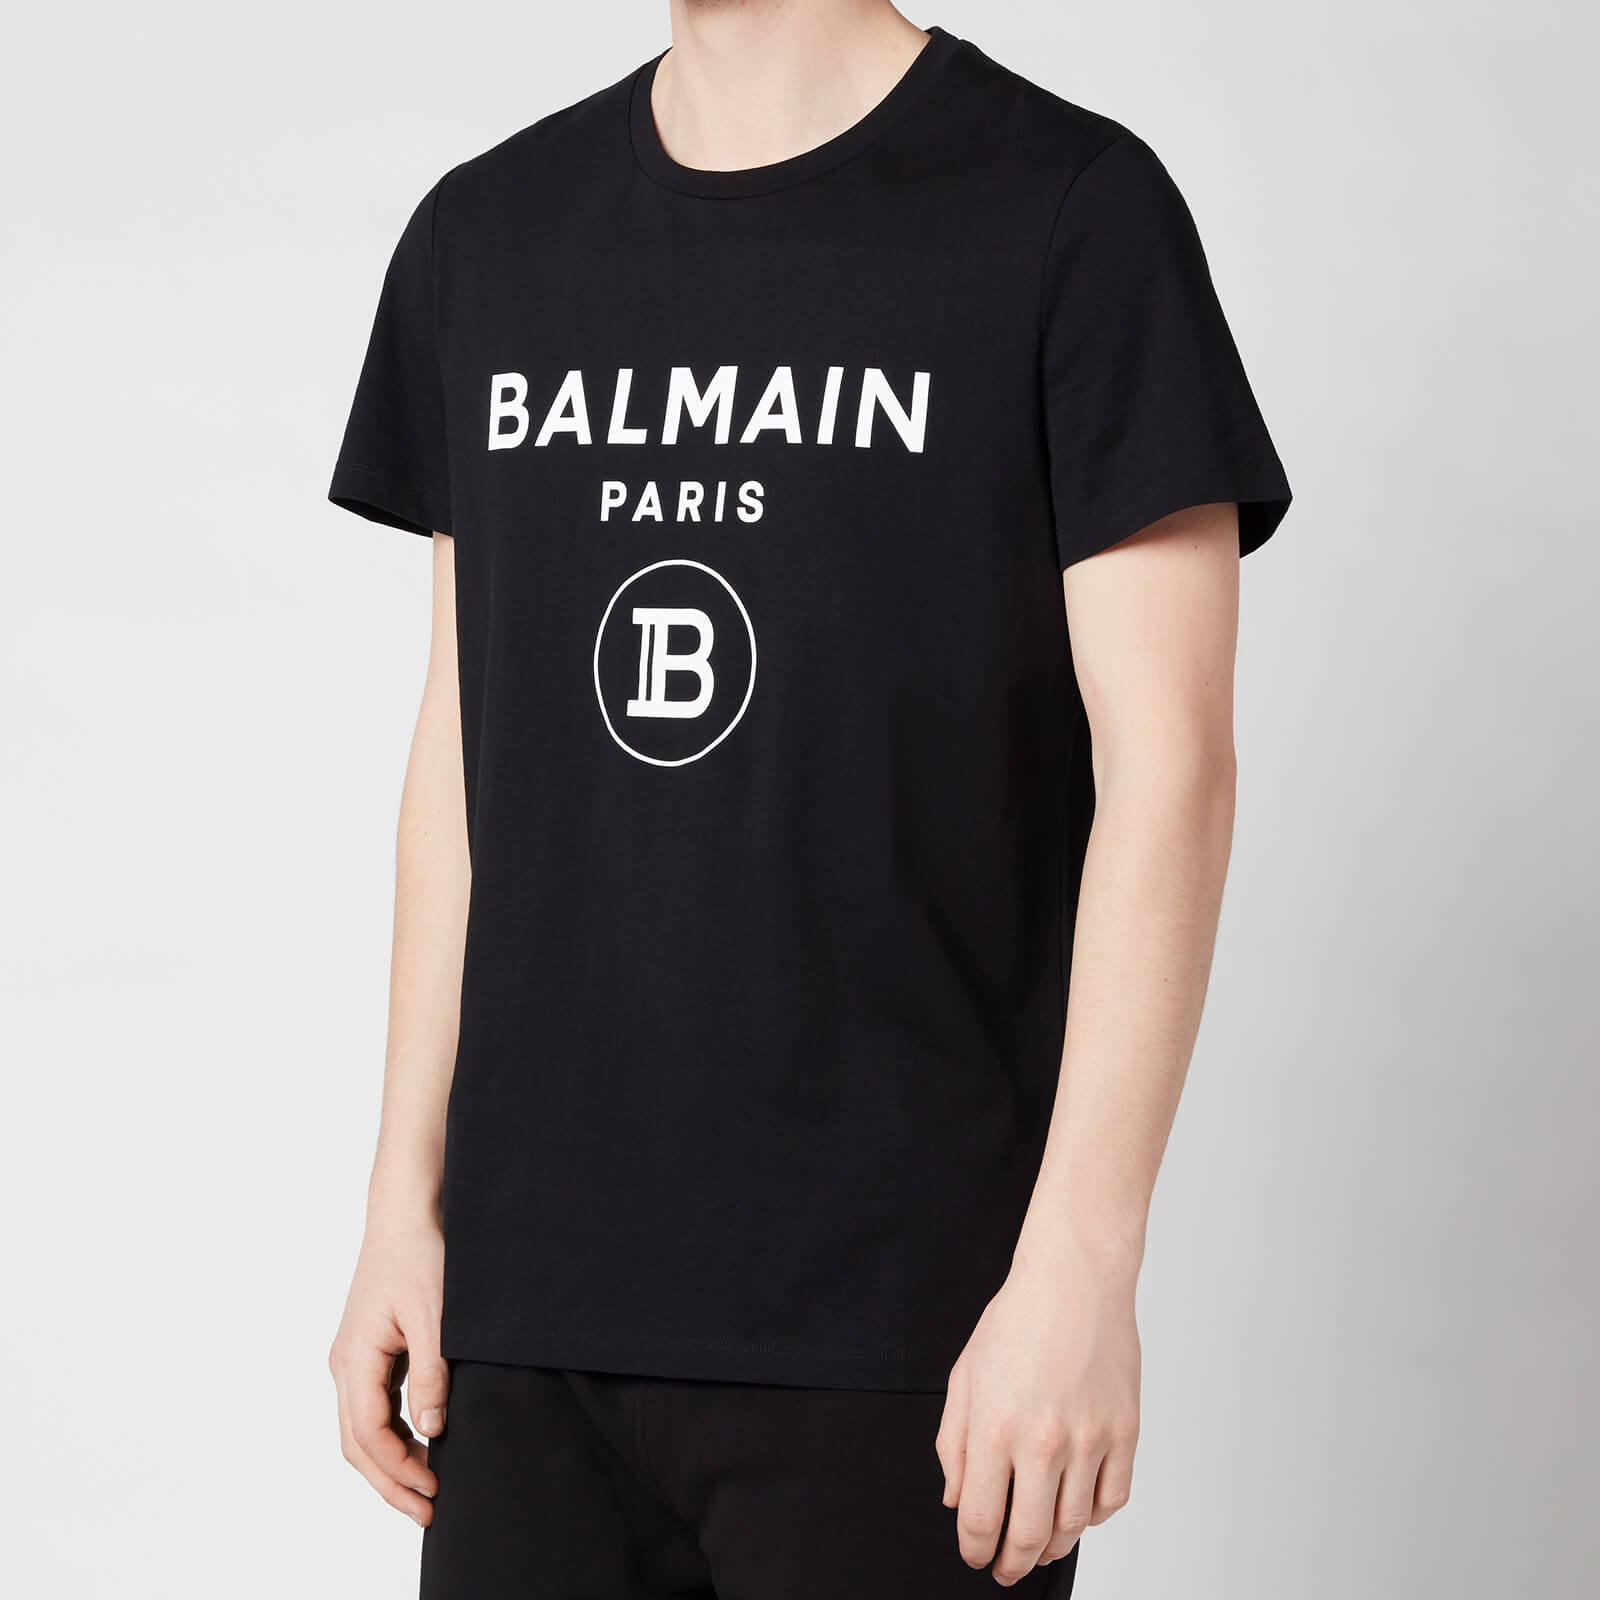 Balmain Men's Printed T-Shirt - Black - XL